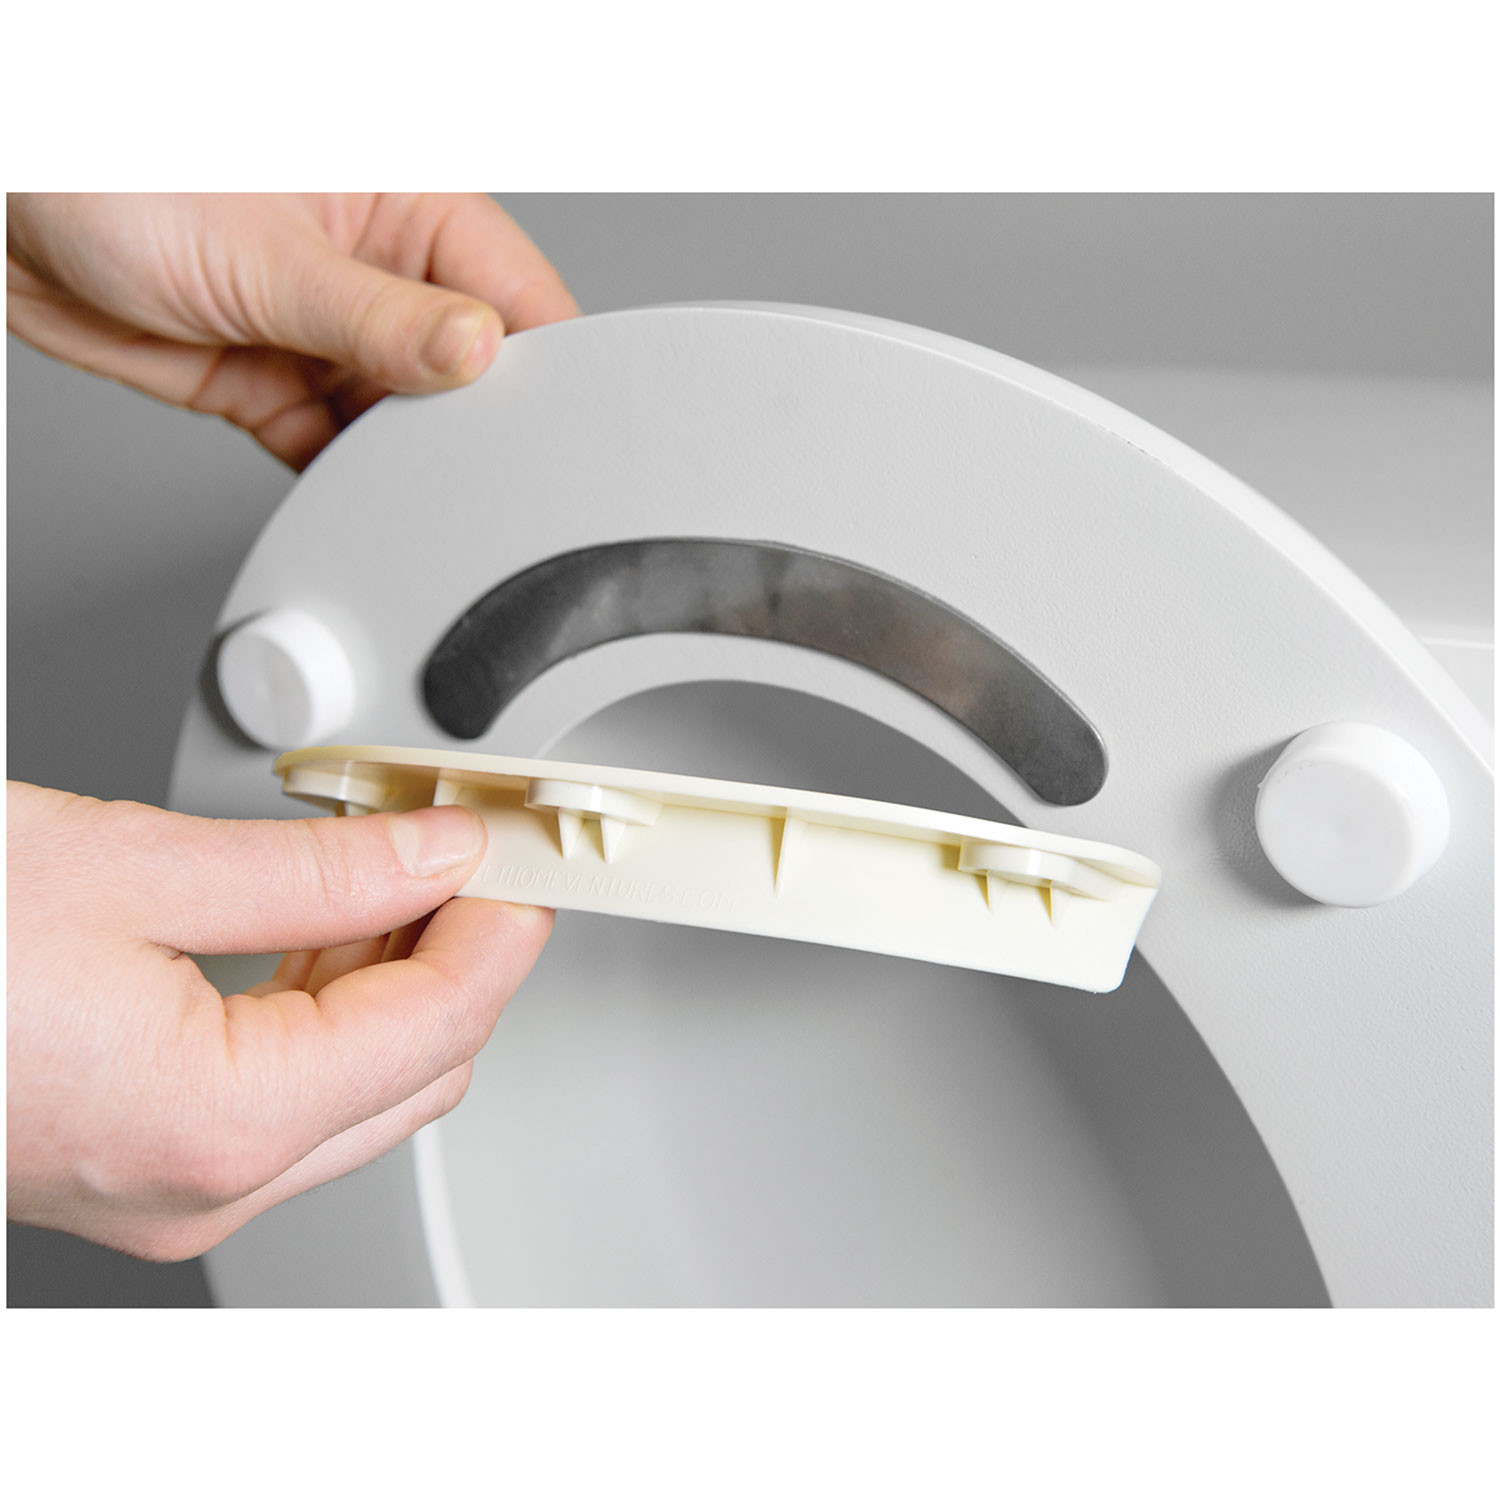 P Guard - Toilet Mess Preventer | Support Plus